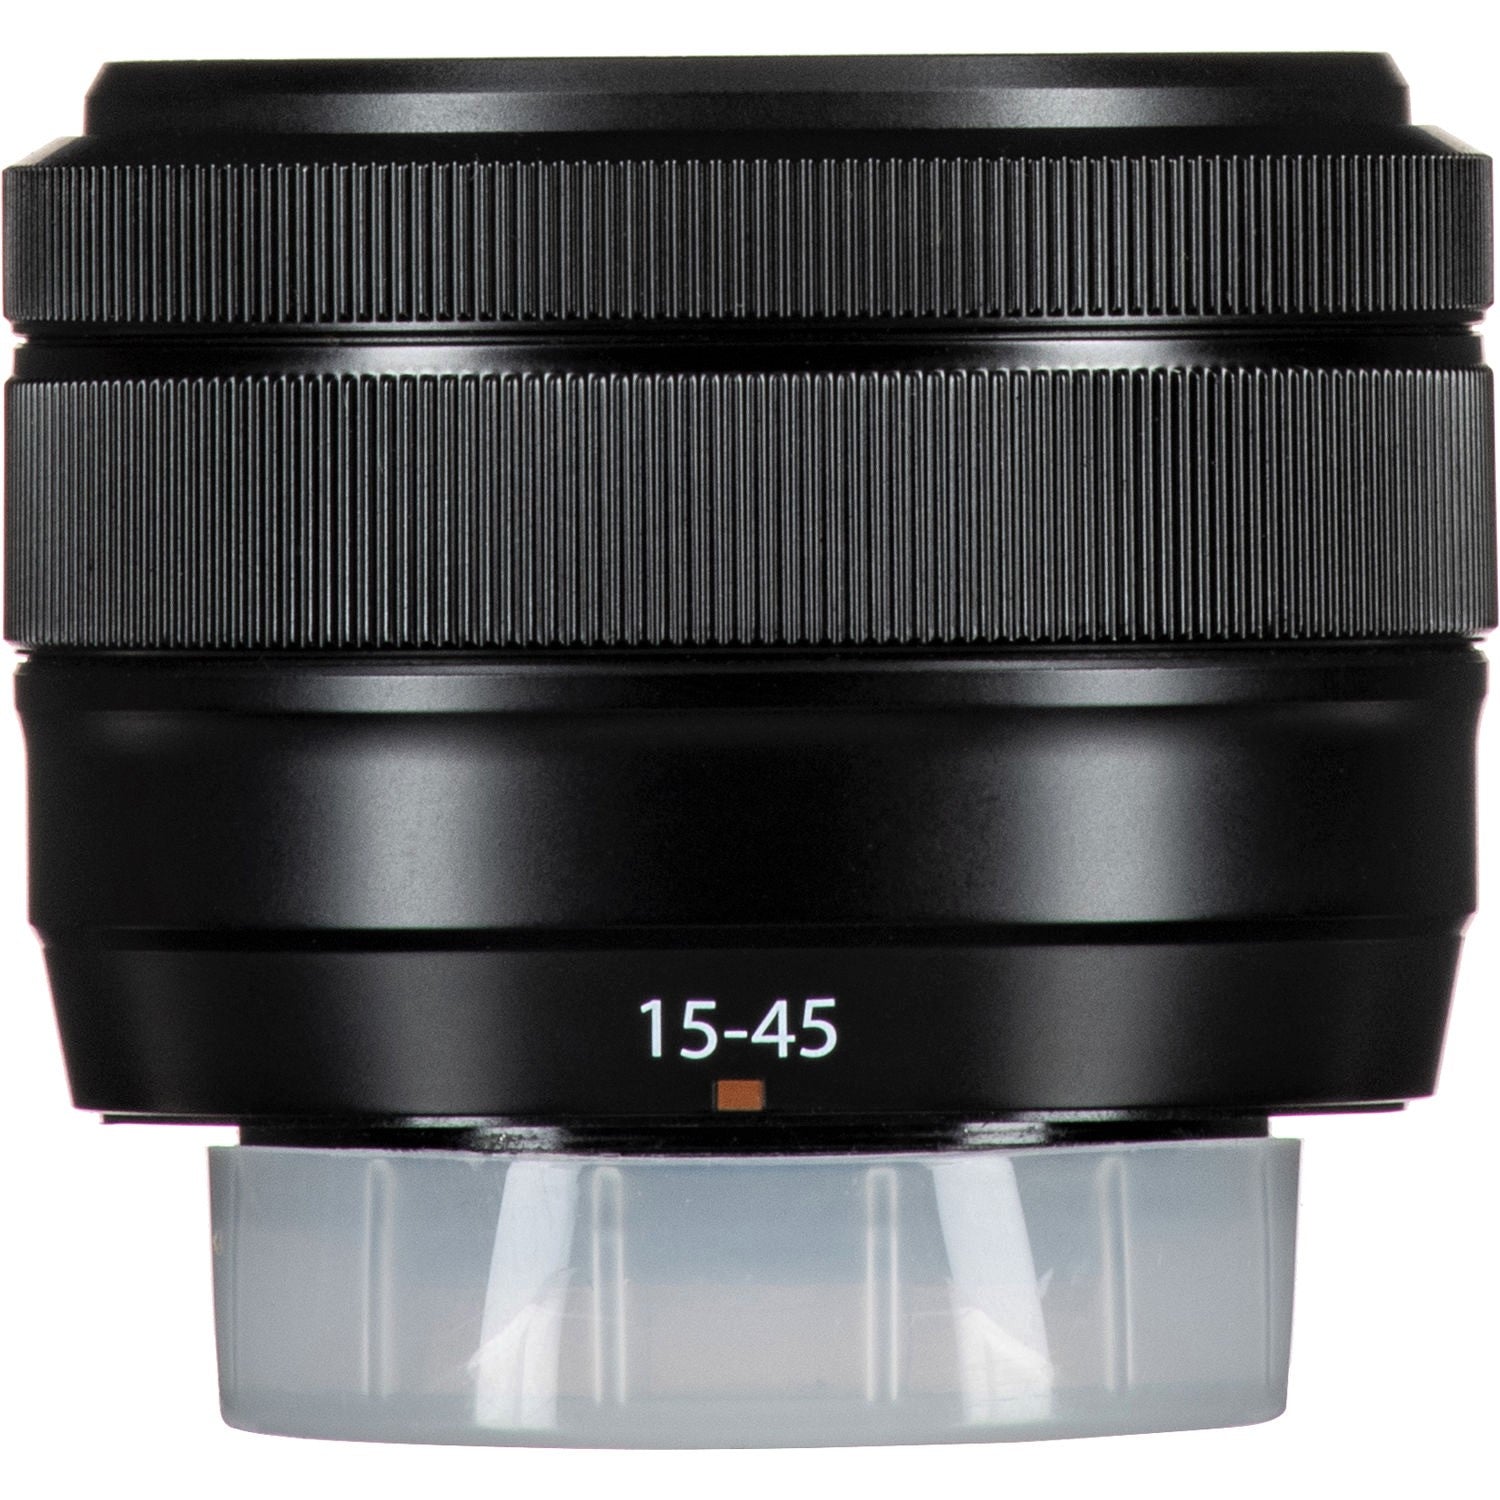 Fujinon XC15-45mmF3.5-5.6 OIS PZ Lens - Black